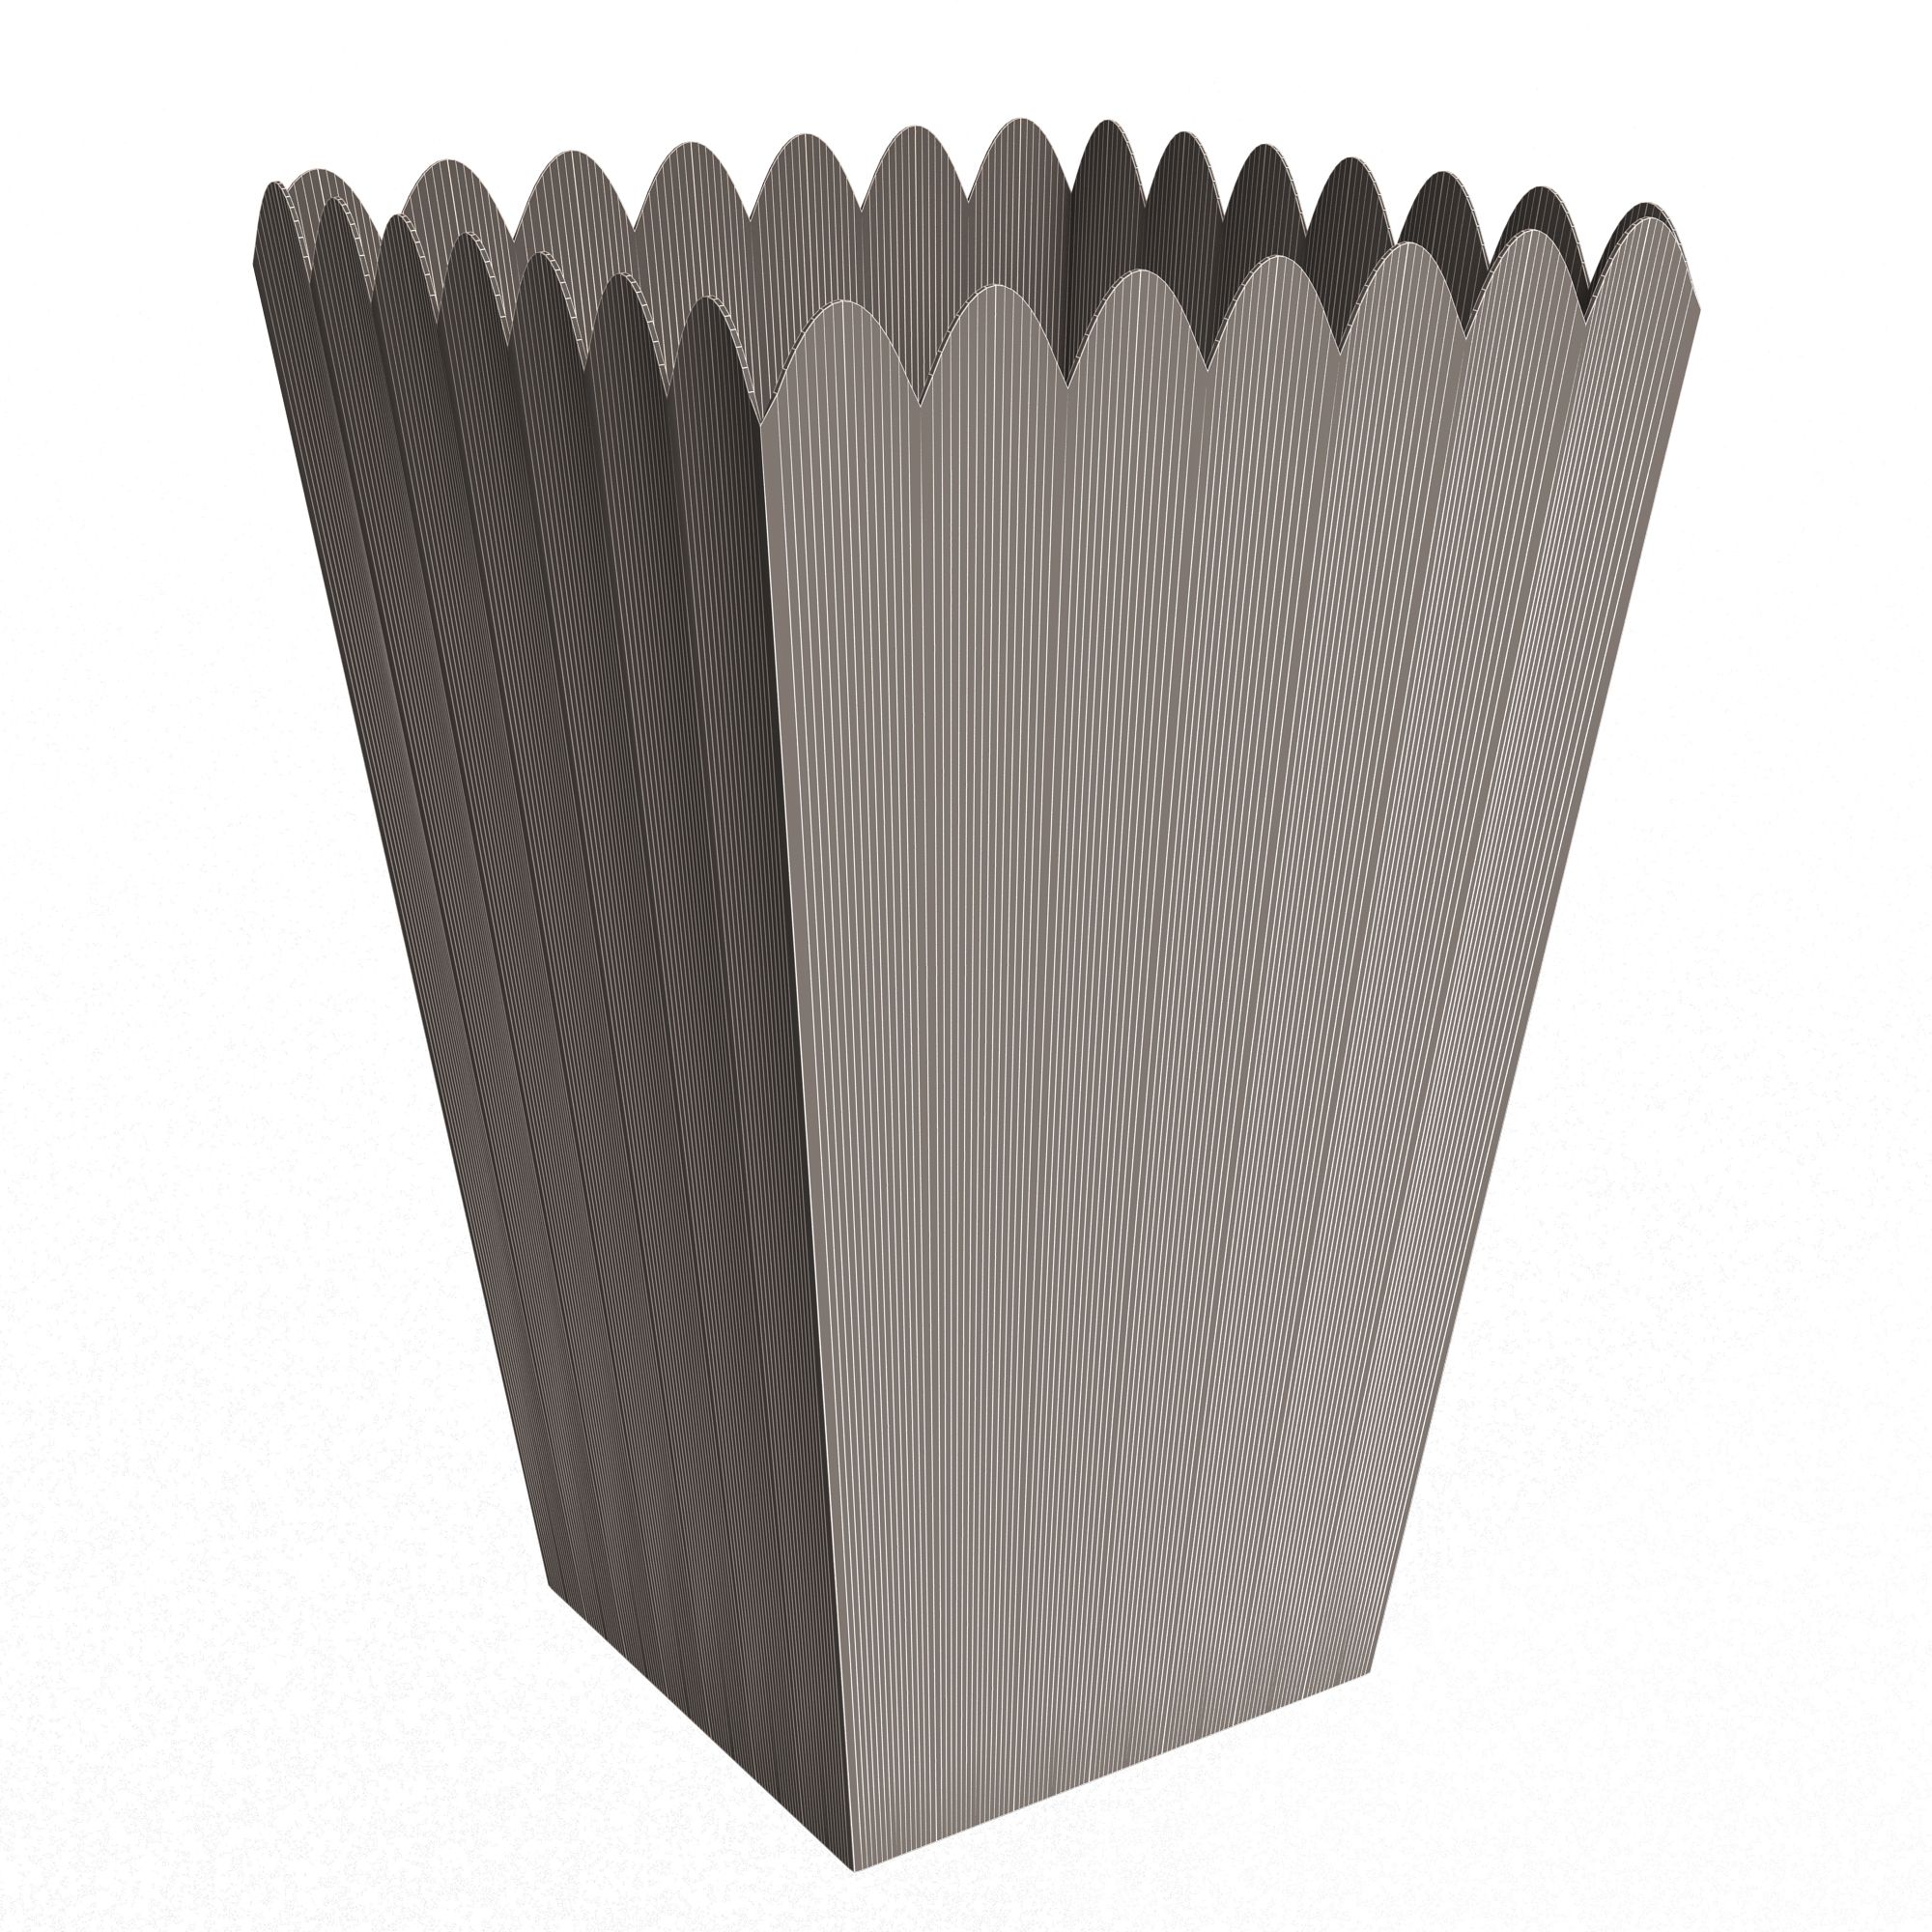 Wireframe-Popkorn-Cup-1.jpg Download free file Popkorn Cup • 3D printing model, Caspian3DWorld